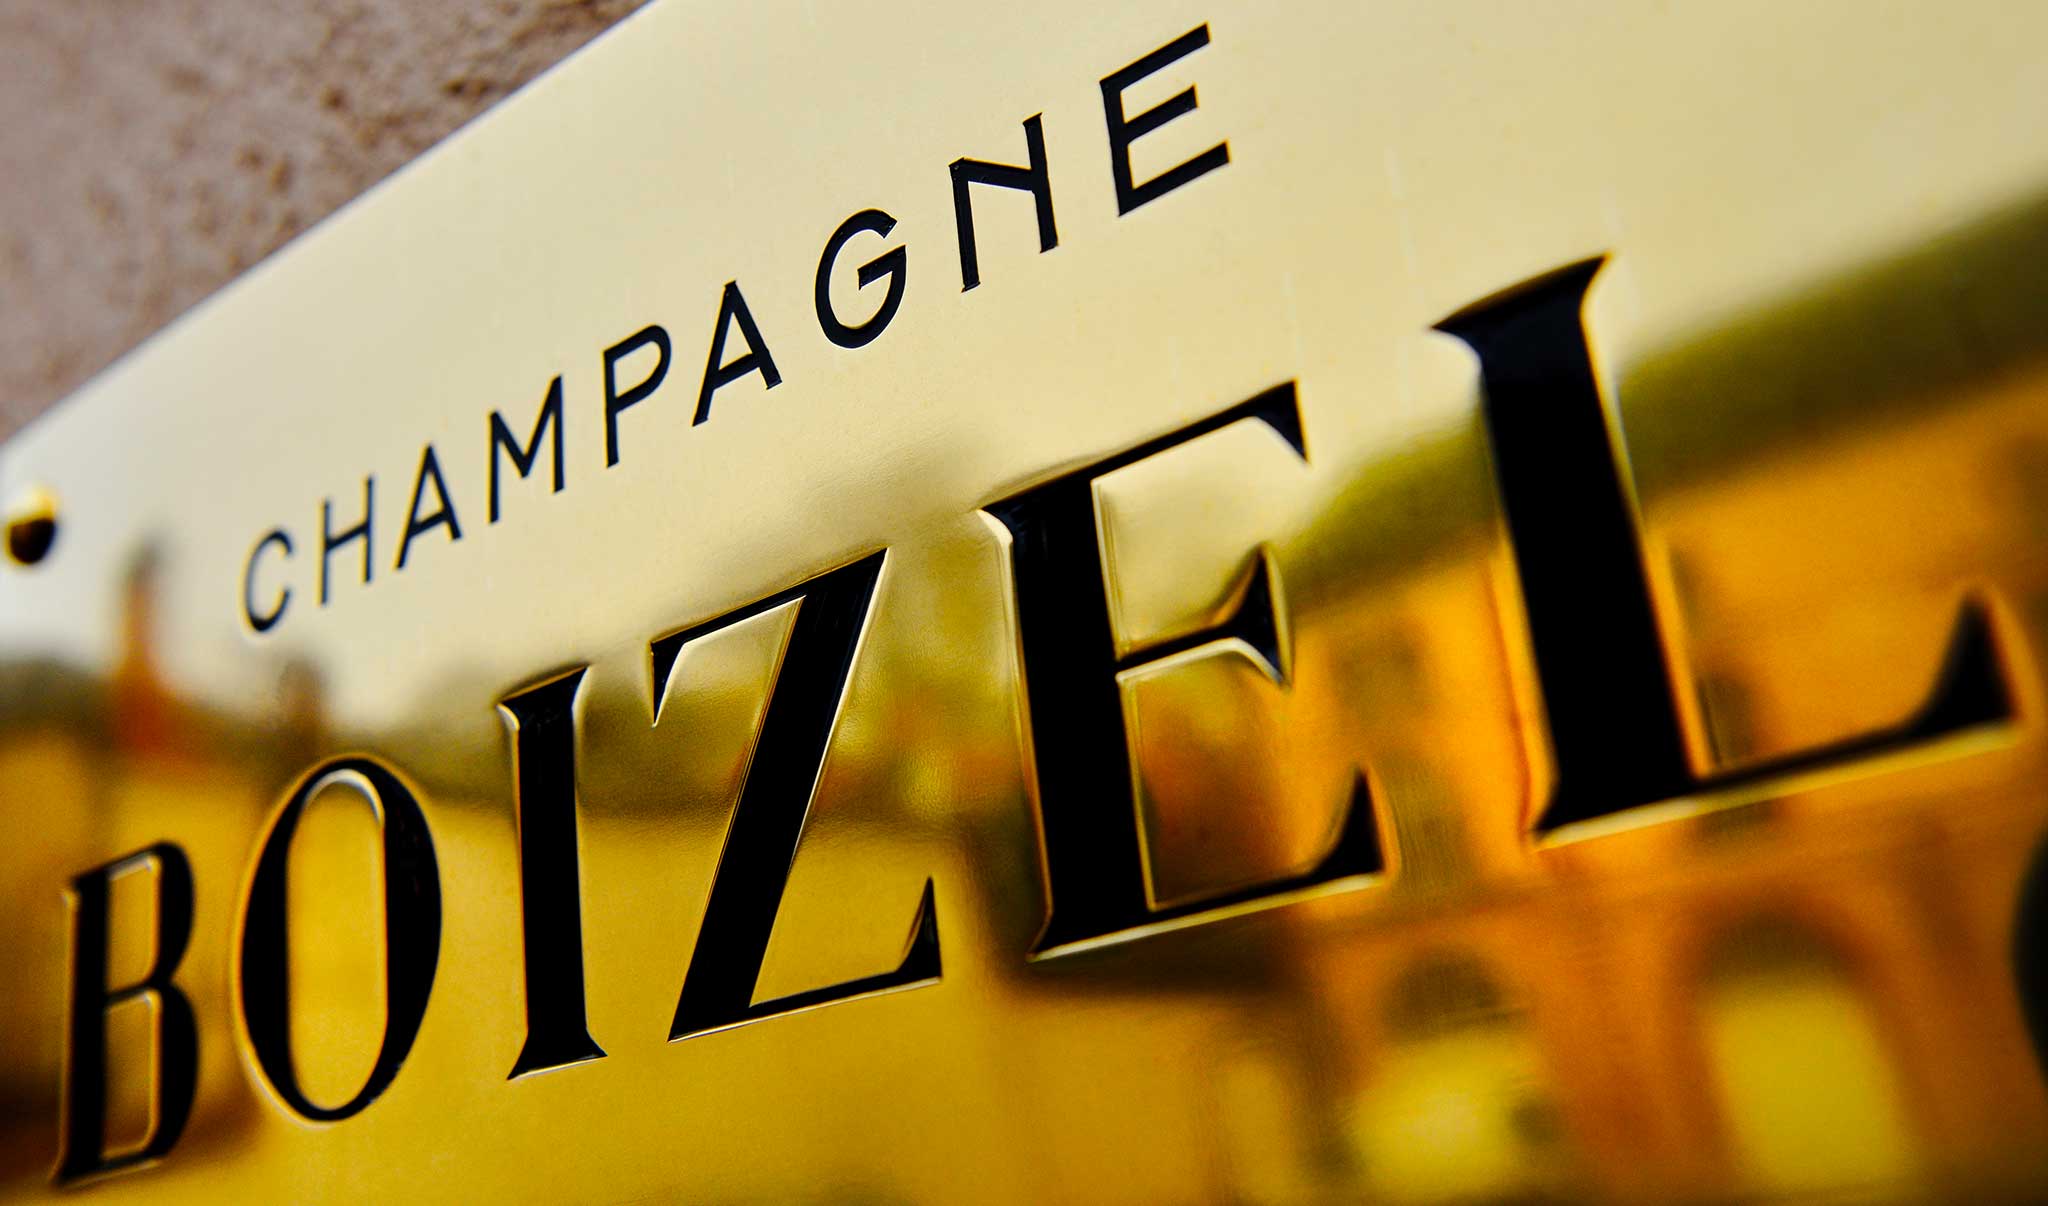 Home - Champagne Boizel - Epernay France